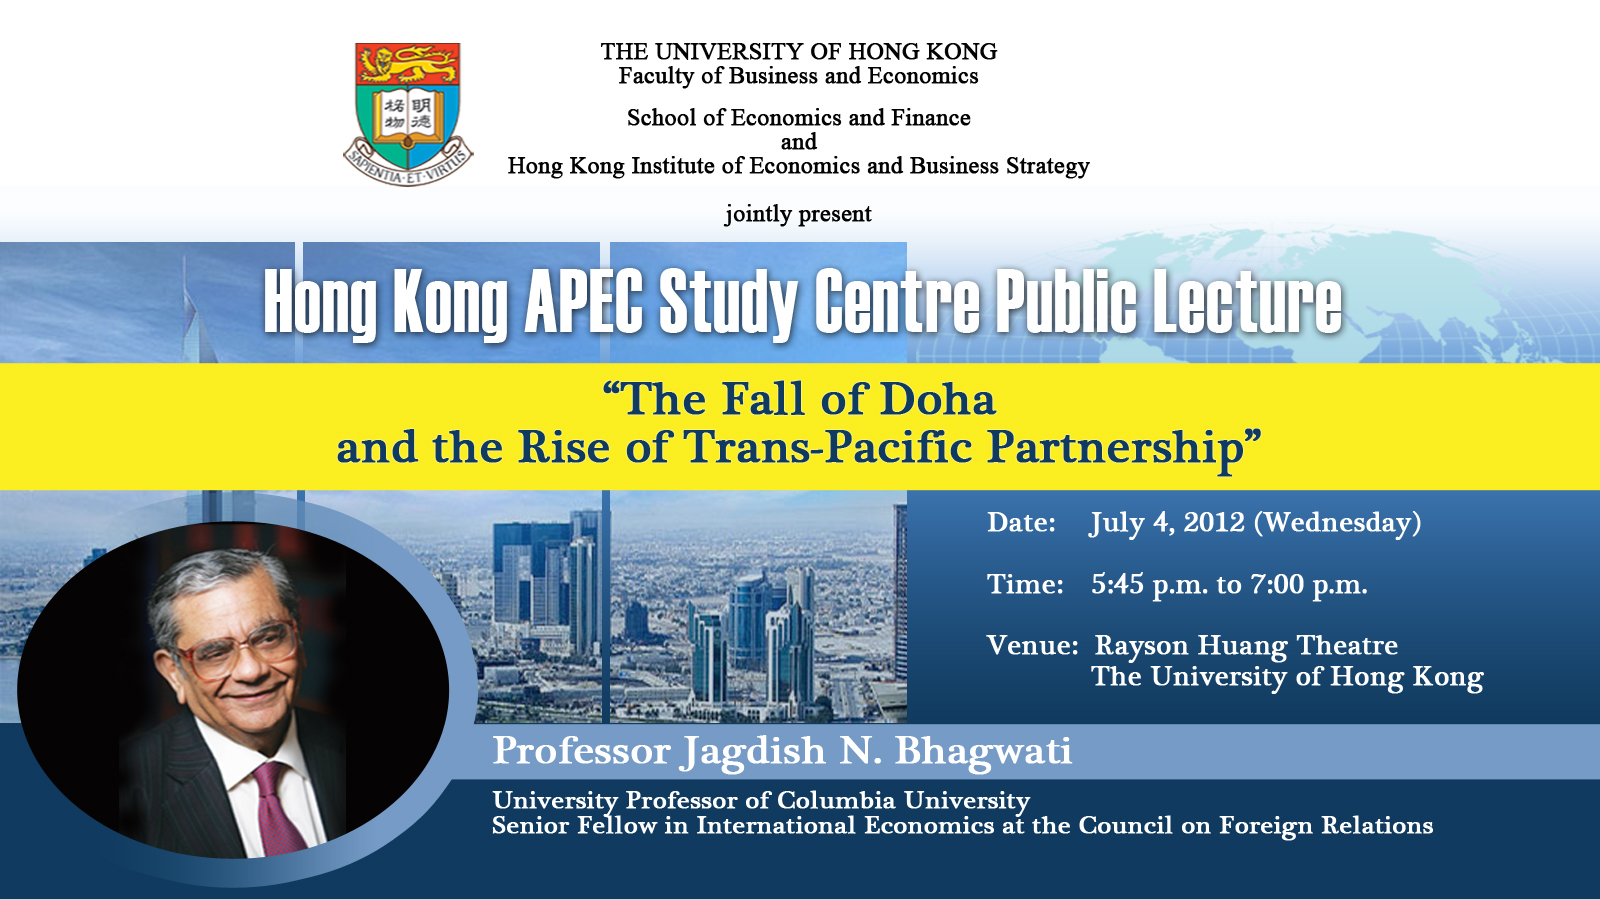 Hong Kong APE Study Centre Public Lecture by Professor Jagdish N. Bhagwati